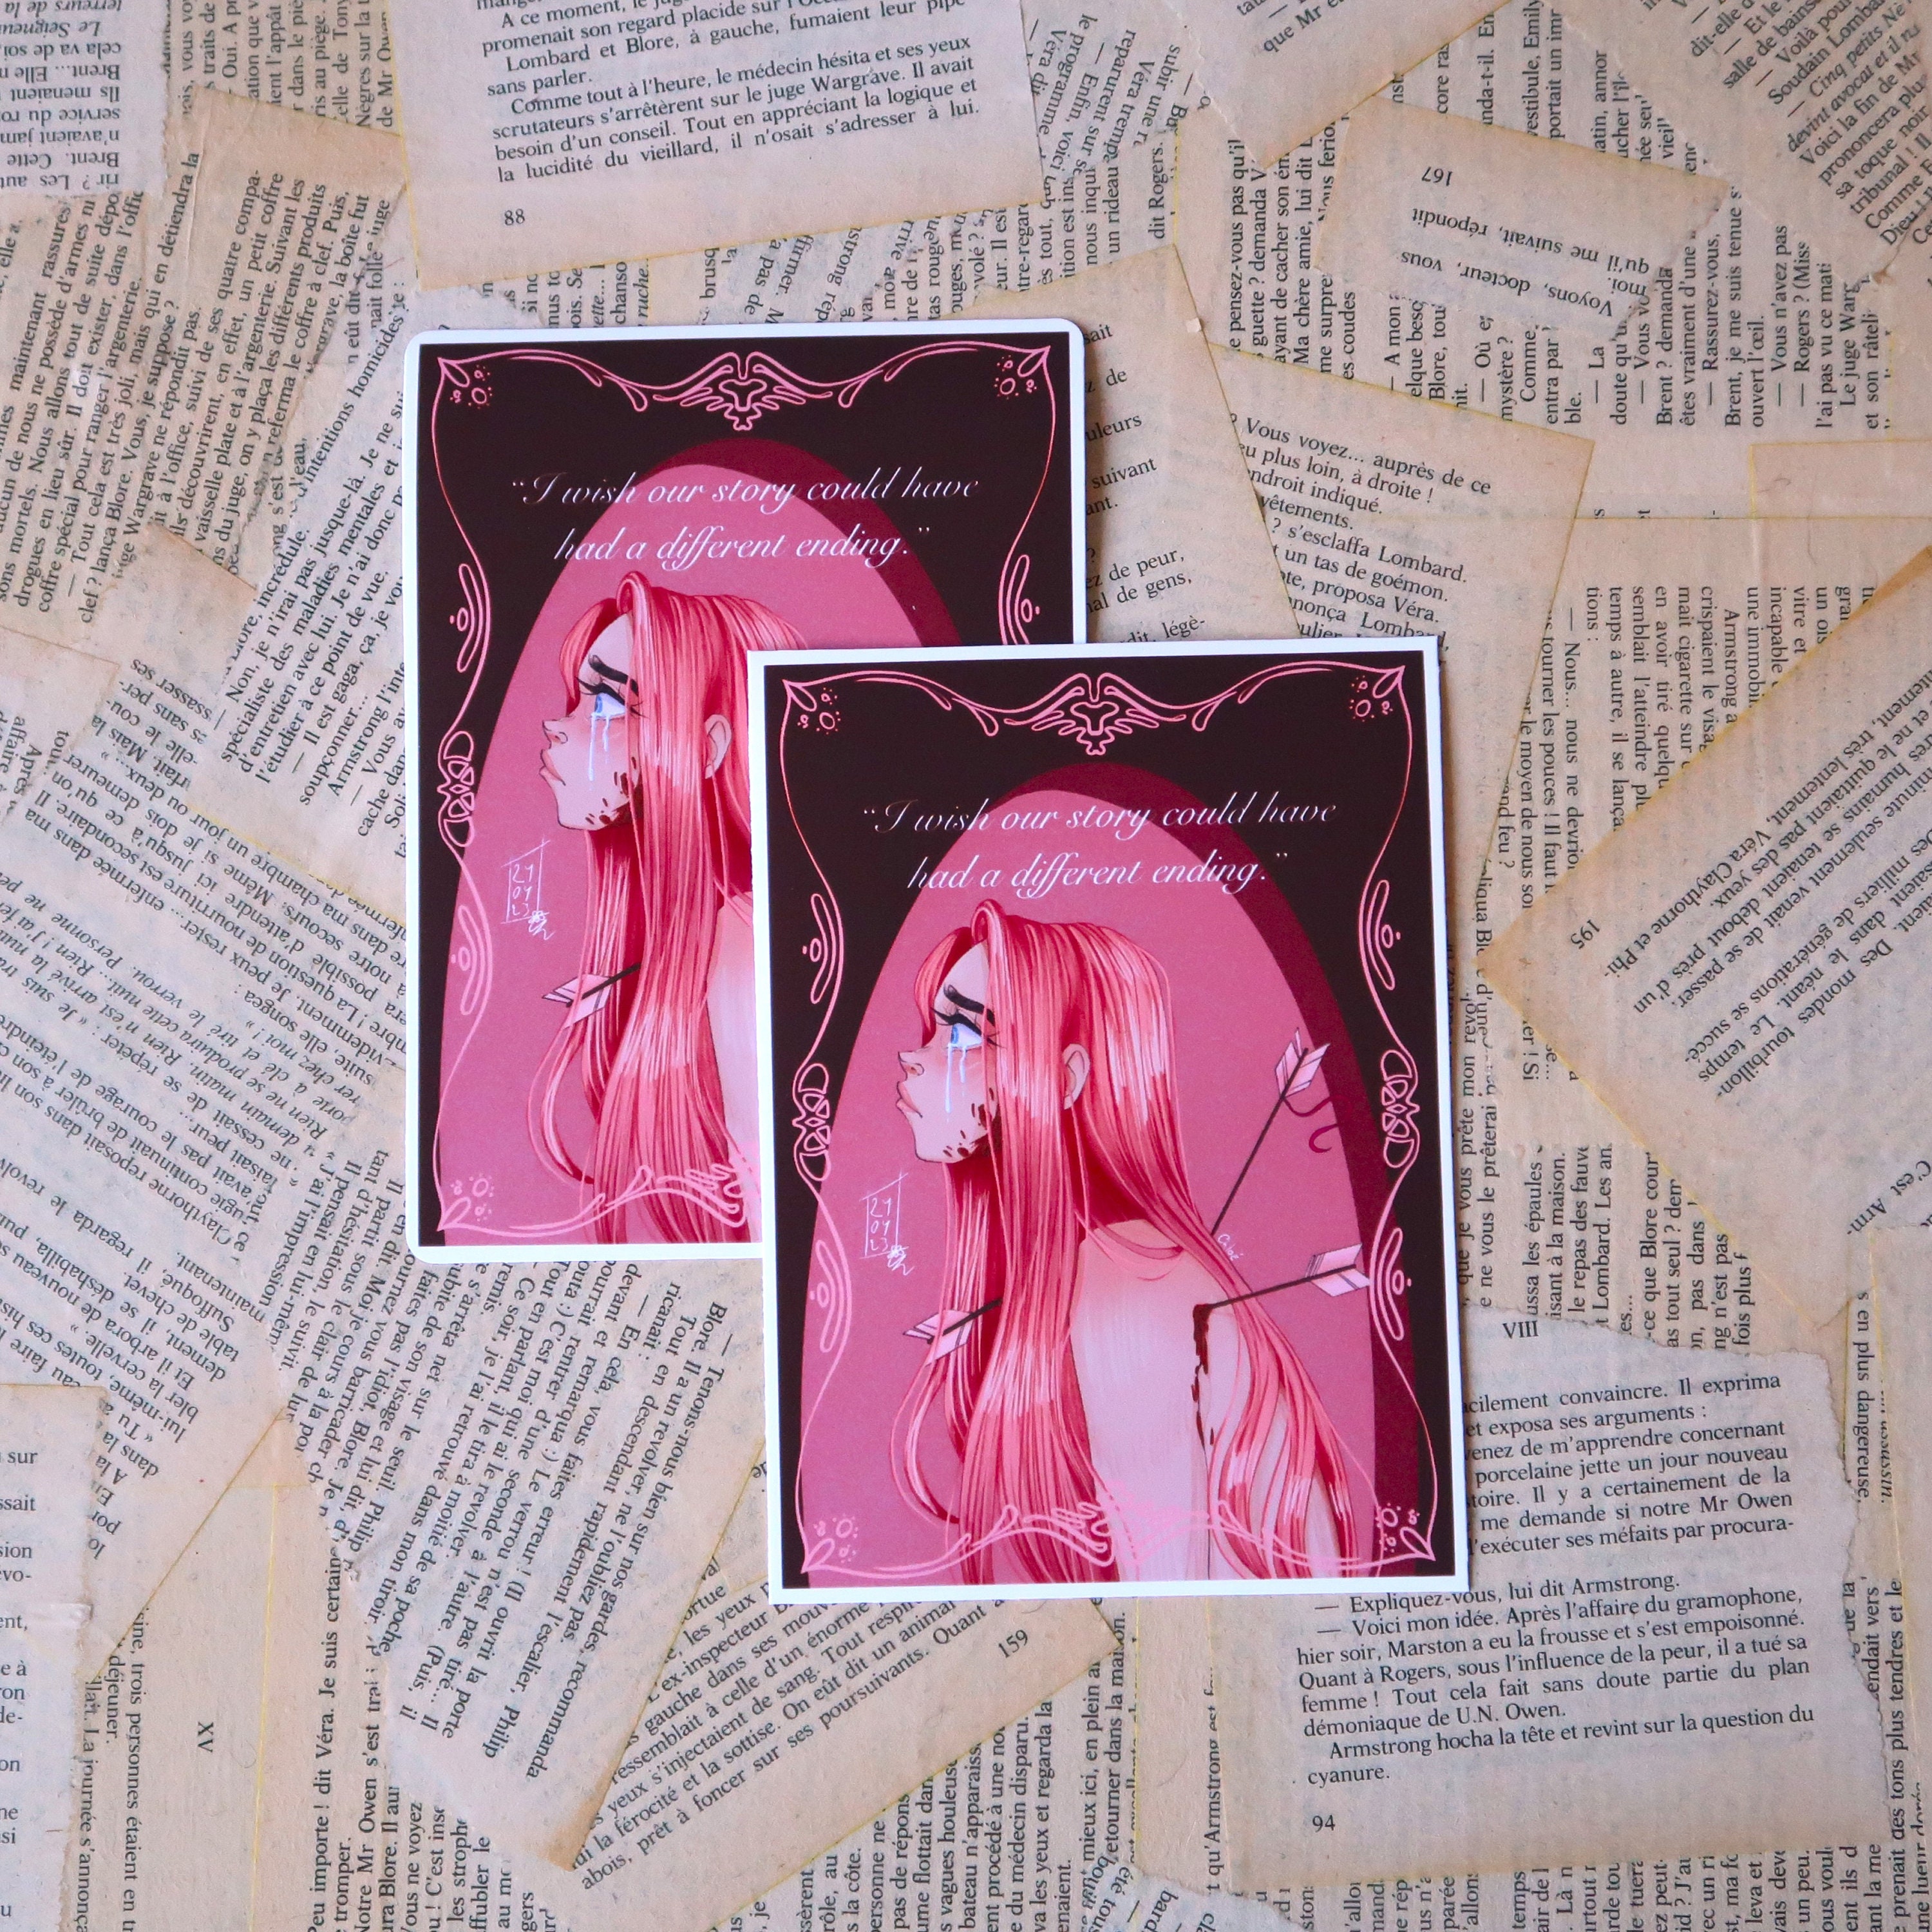 Once Upon A Broken Heart Art Print Pack – Reading Portal